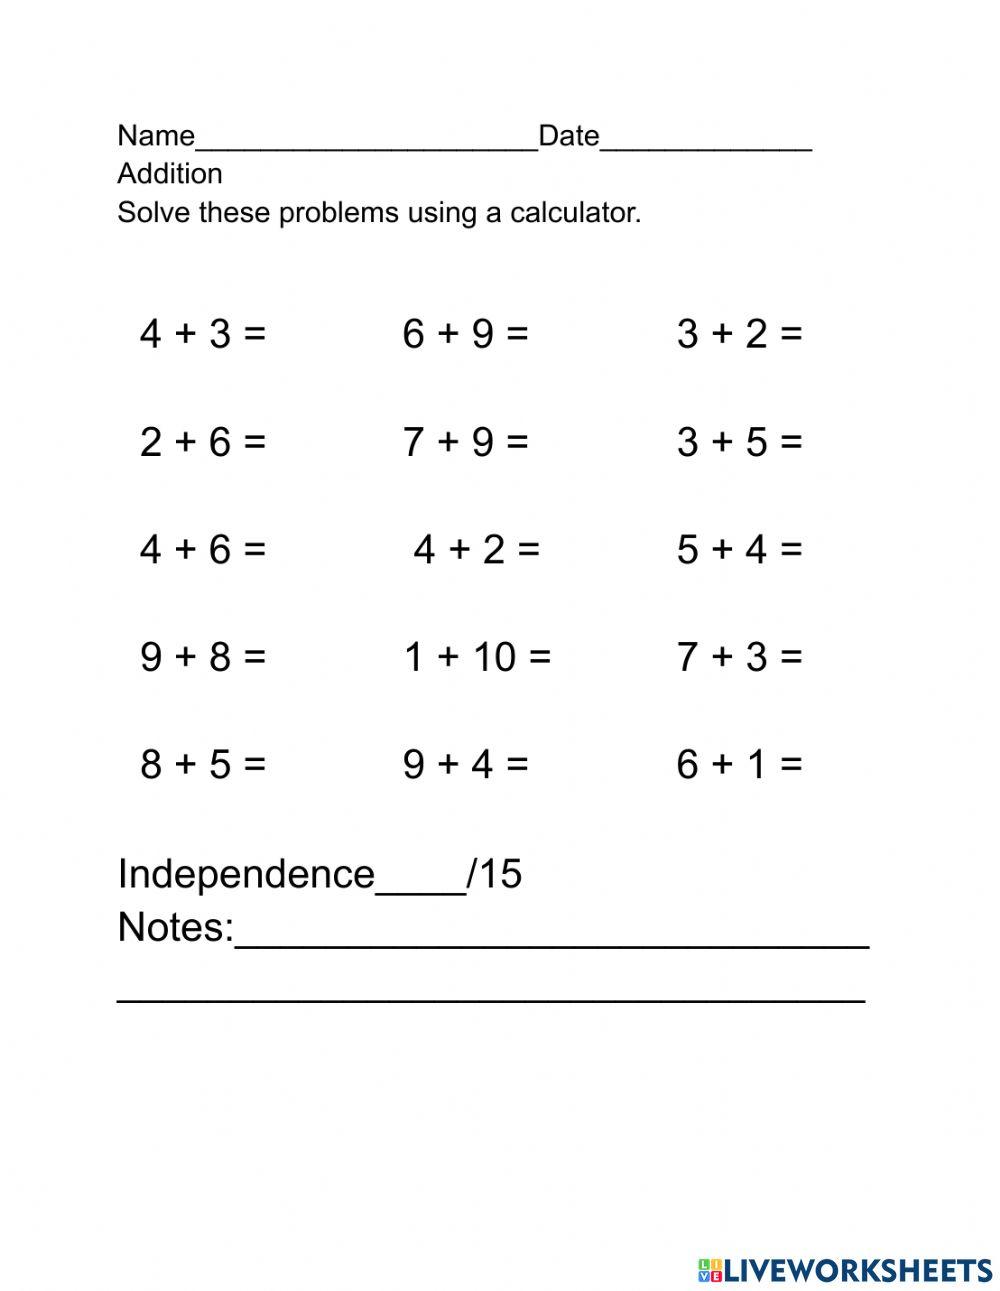 Math addition problems using a calculator